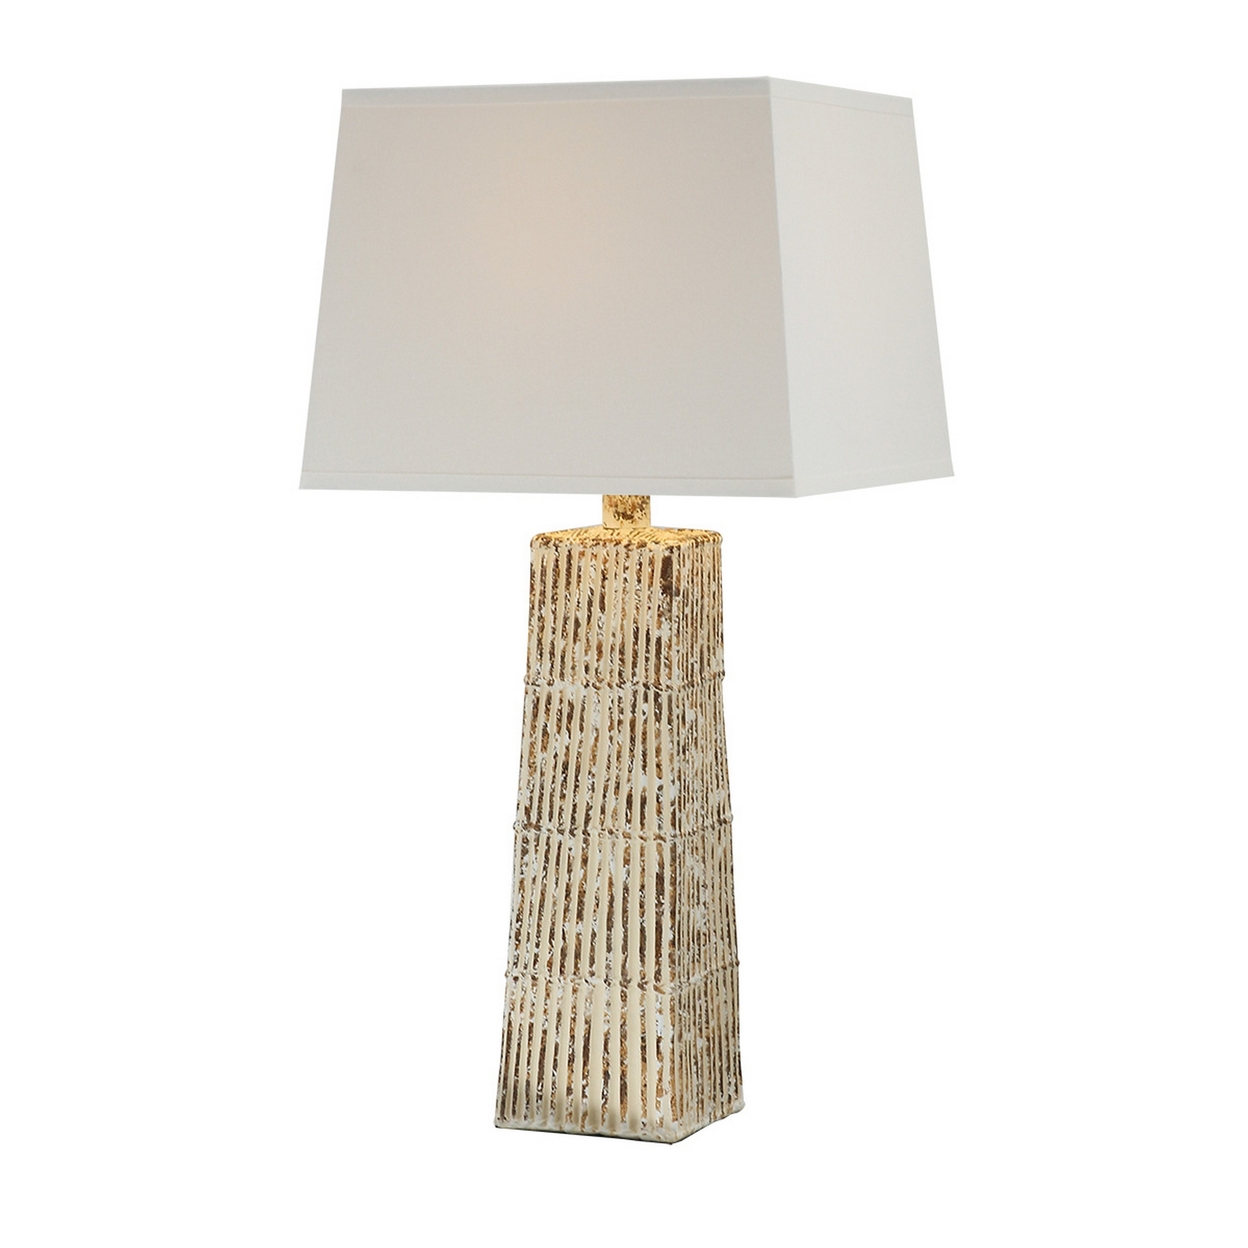 Fila 29 Inch Table Lamp, White Square Shade, Elongated Body, Bamboo Beige - Saltoro Sherpi